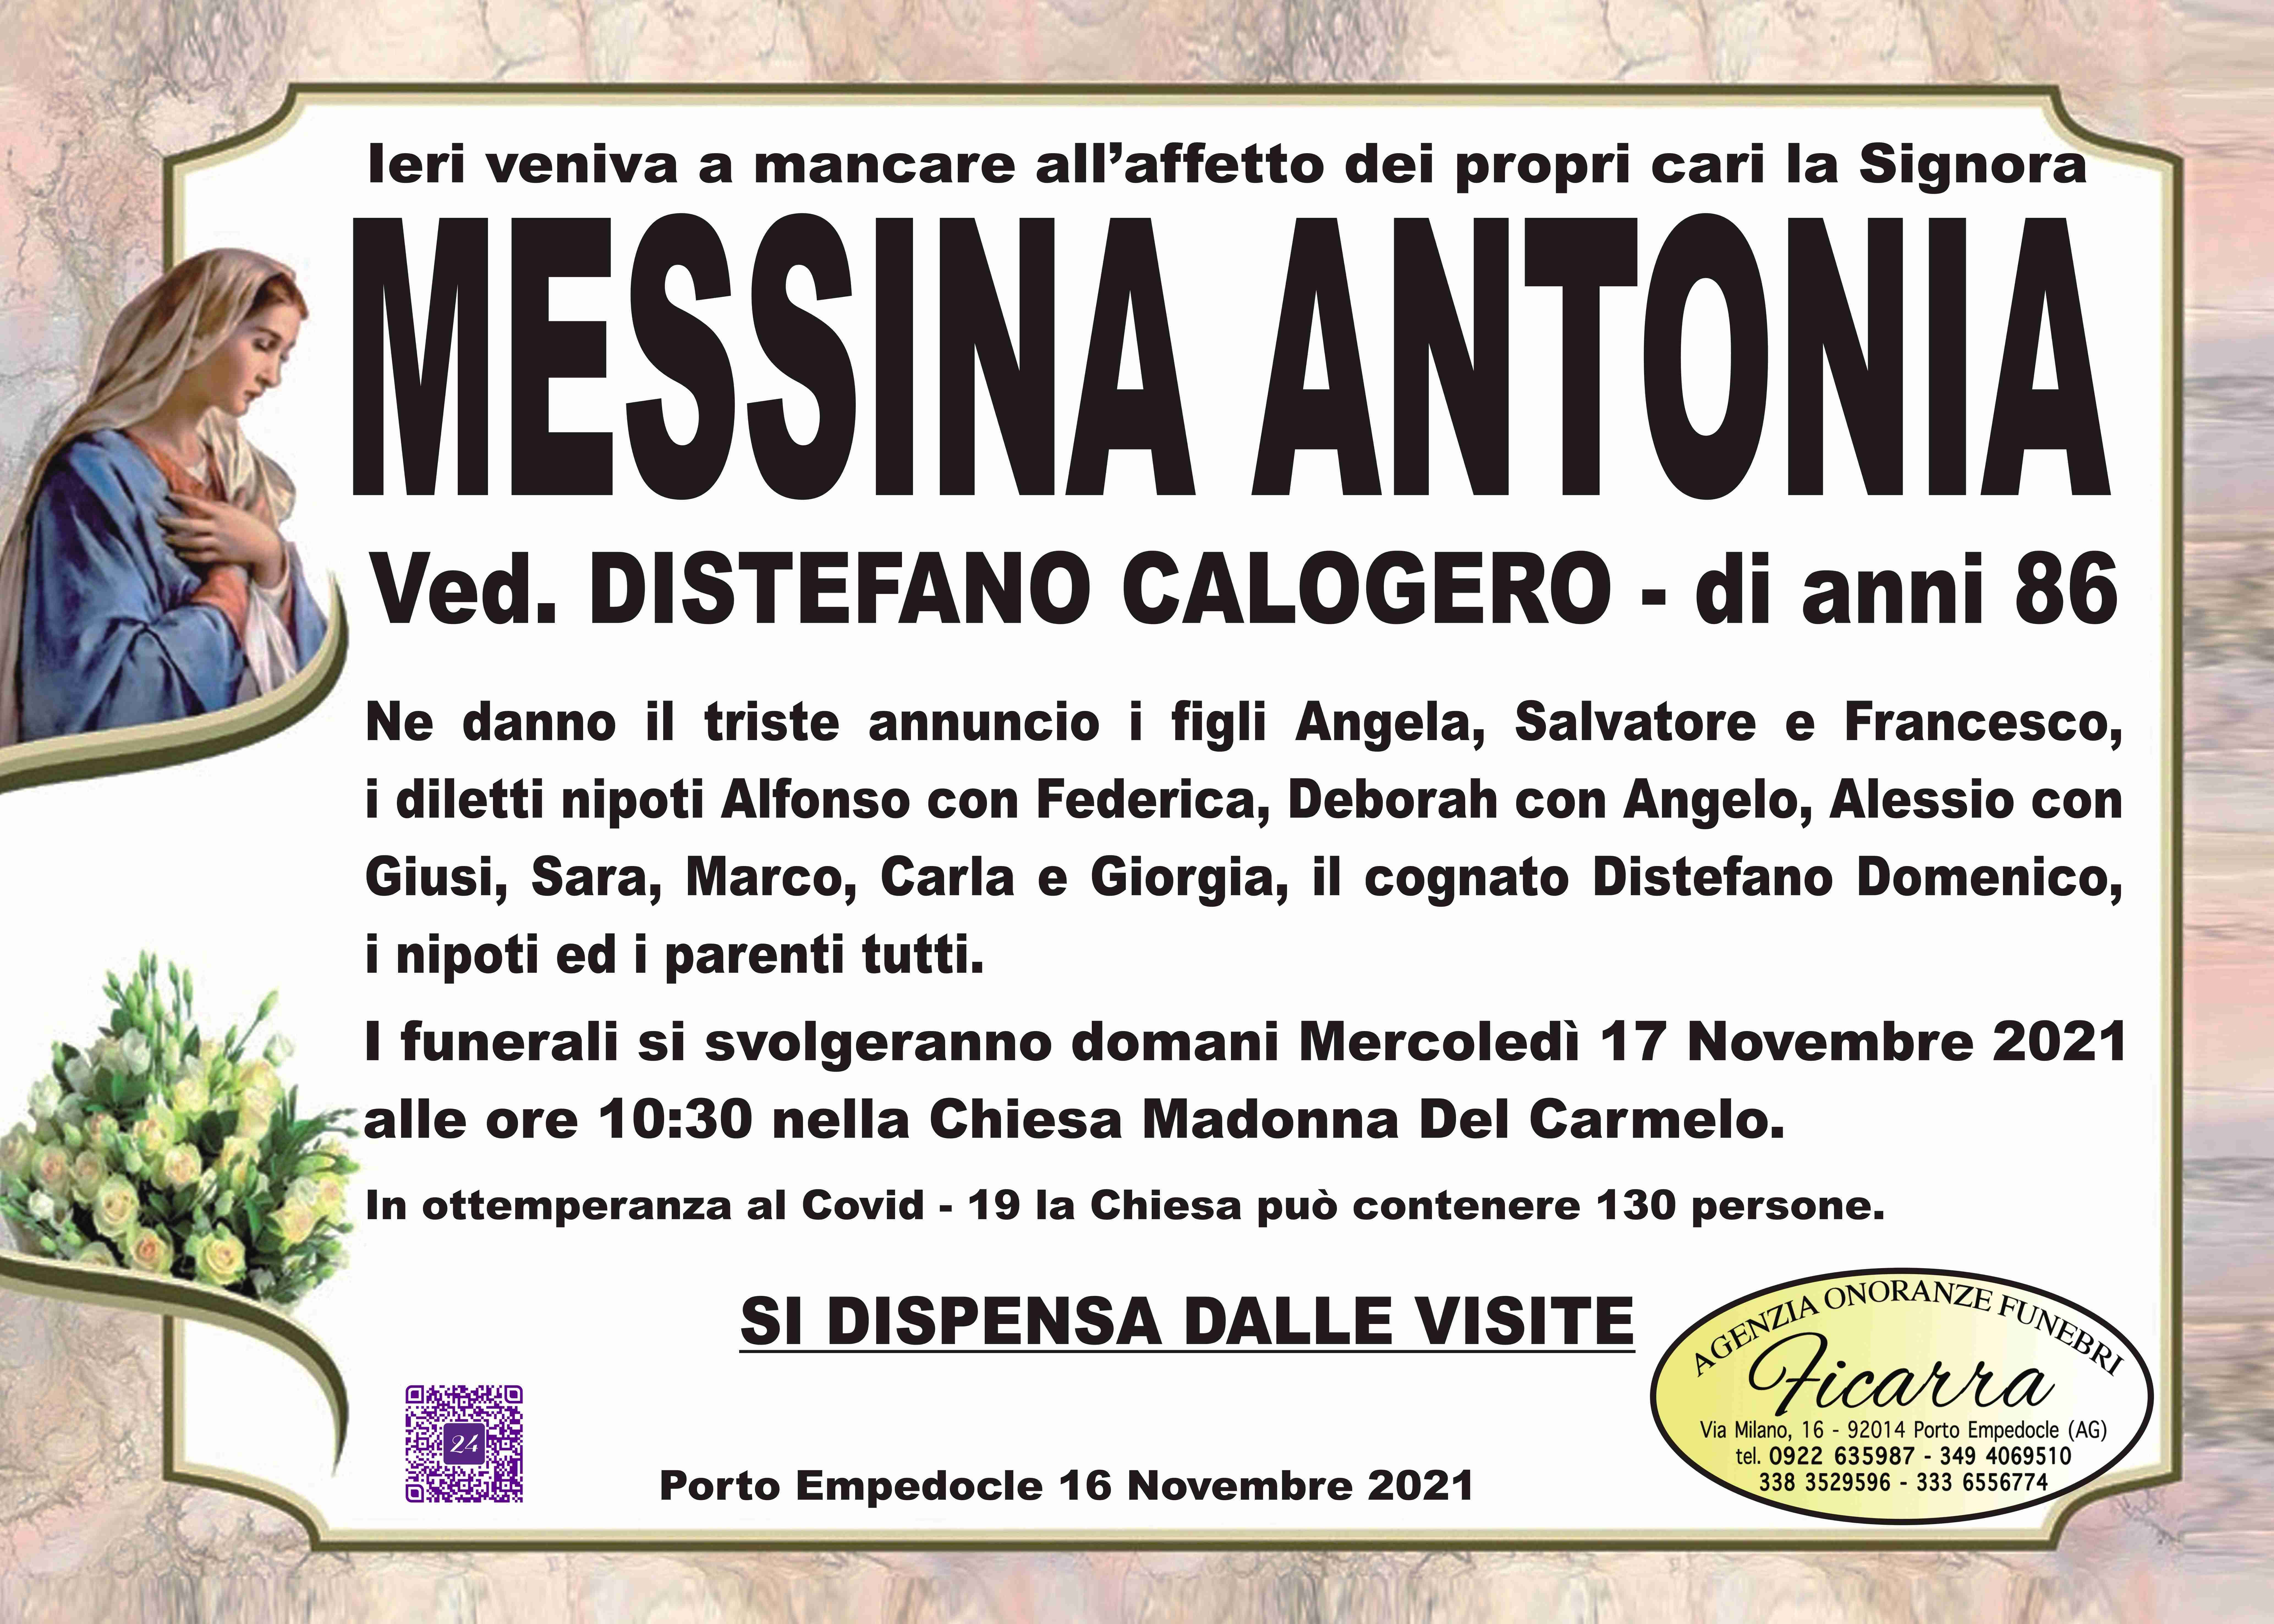 Antonia Messina